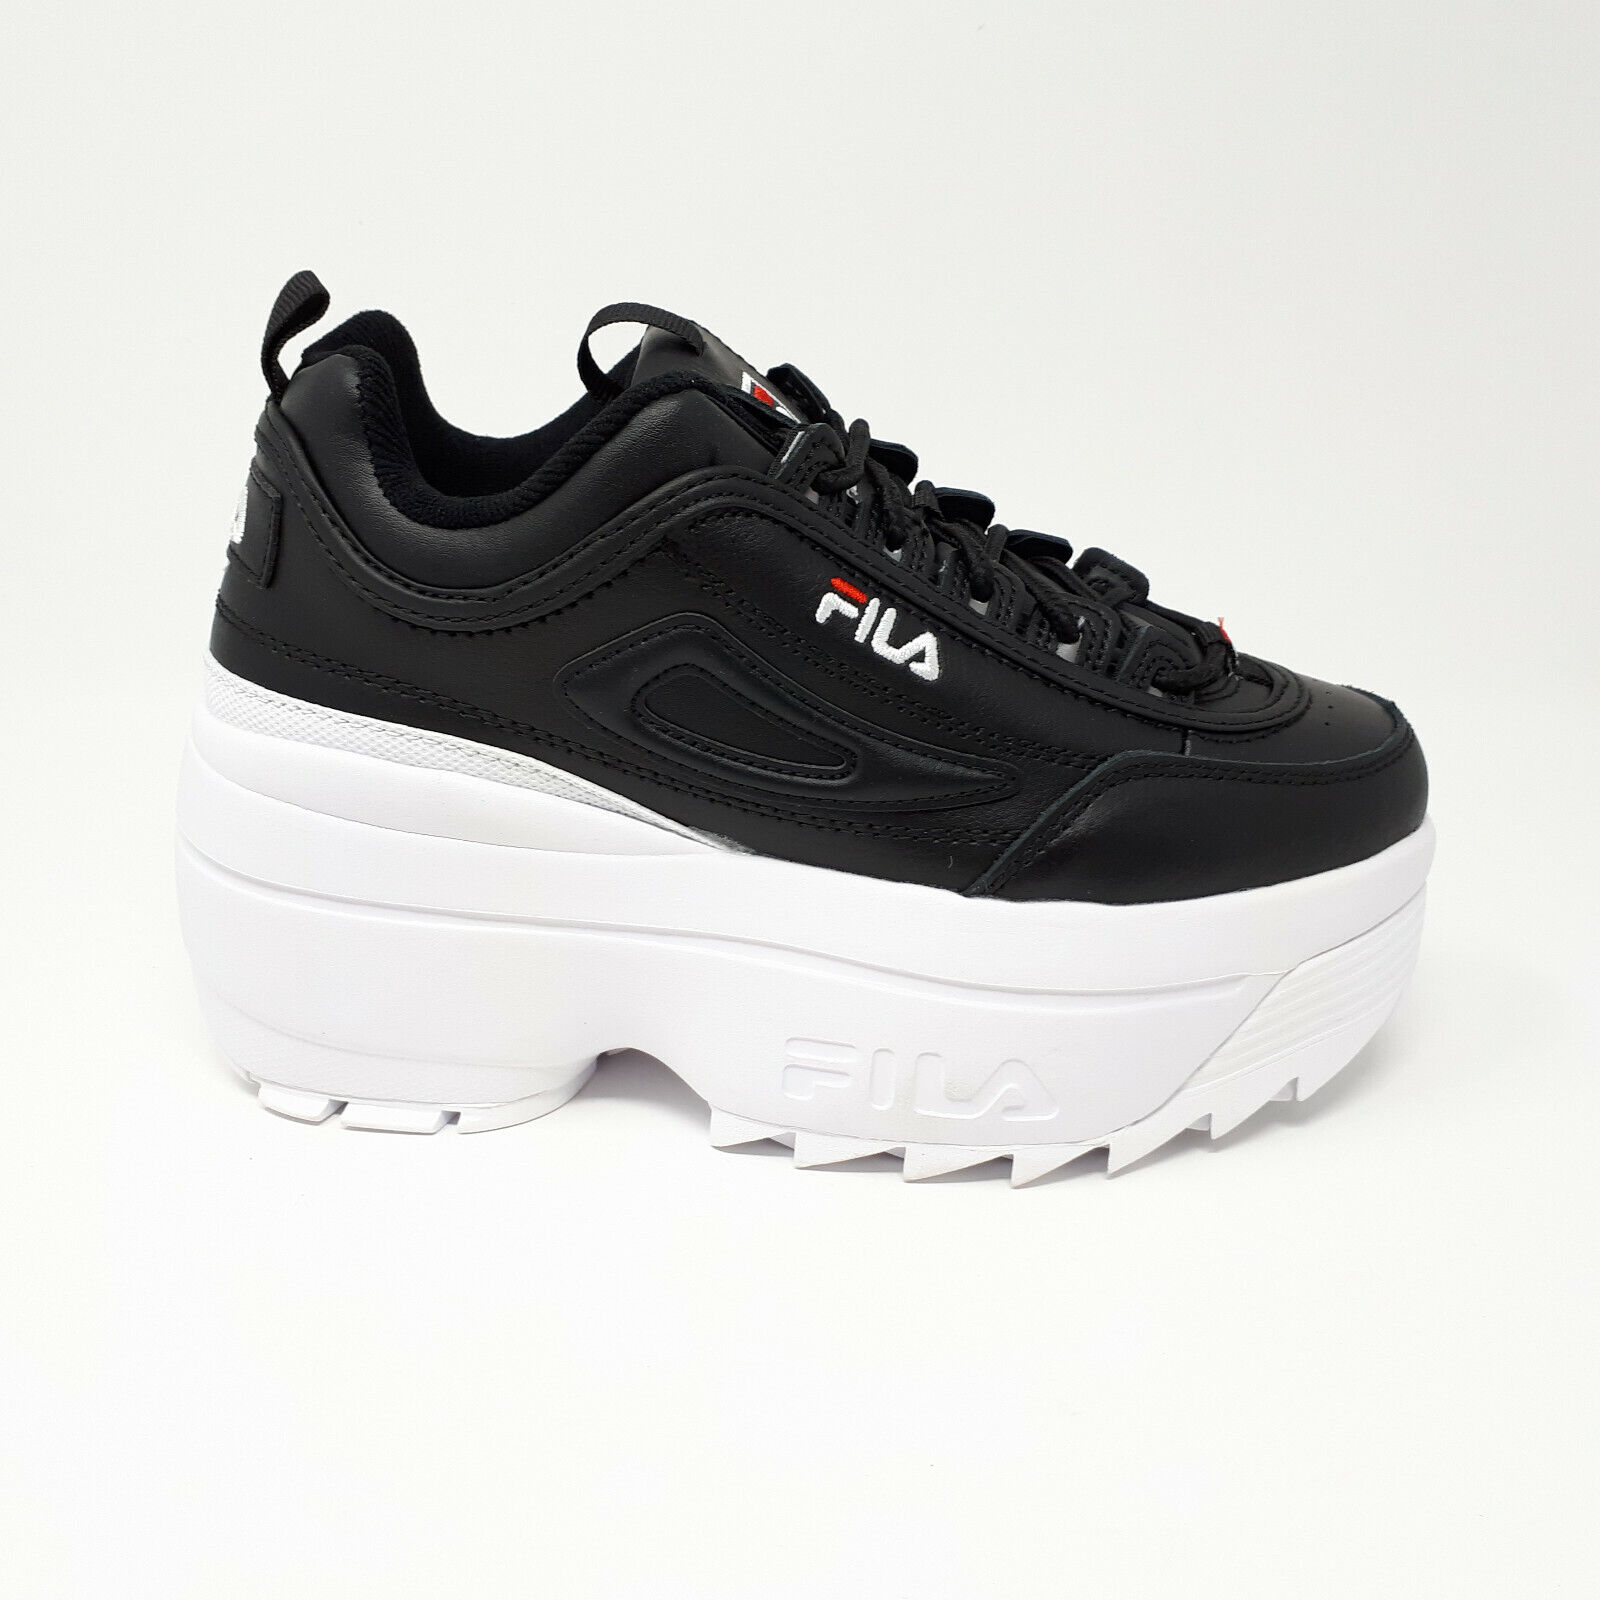 Phobia Udråbstegn undersøgelse NEW FILA Disruptor II 2 Wedge Women's Platform Shoe Sneaker Chunky Retro  Black | eBay